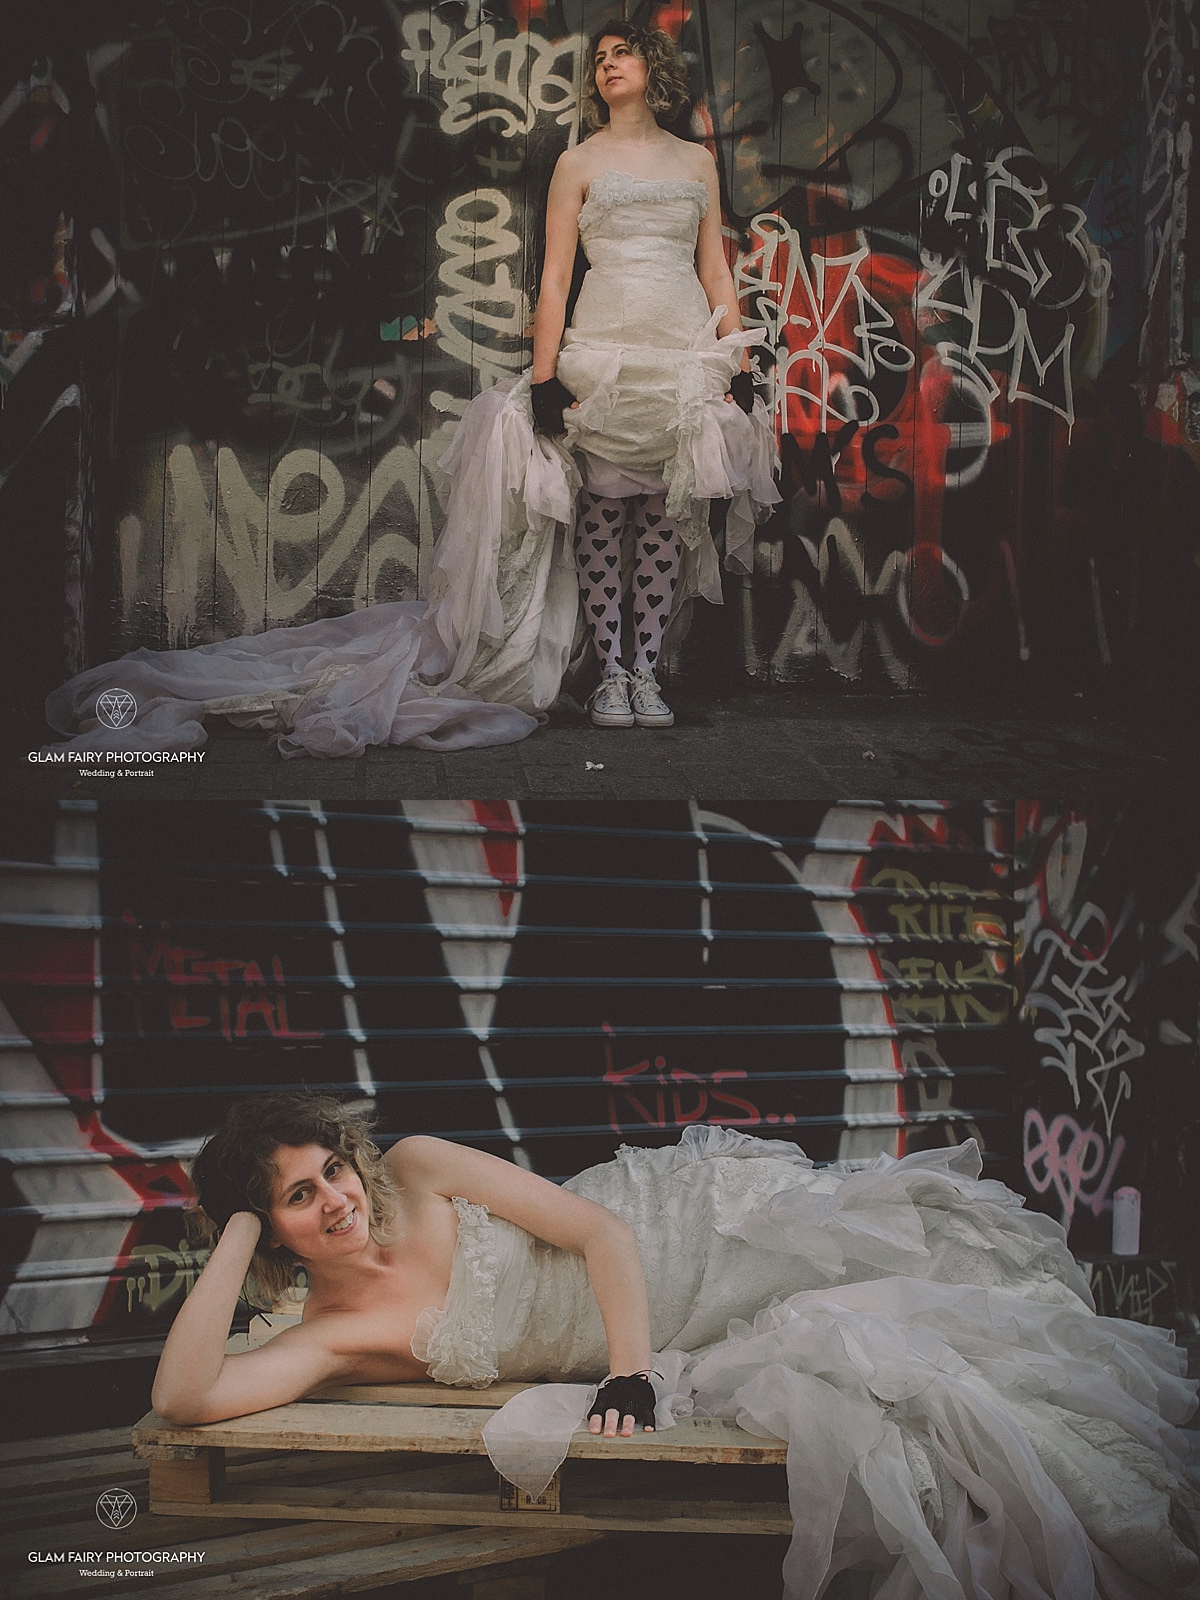 GlamFairyPhotography-trash-the-dress-street-art-amandine_0011